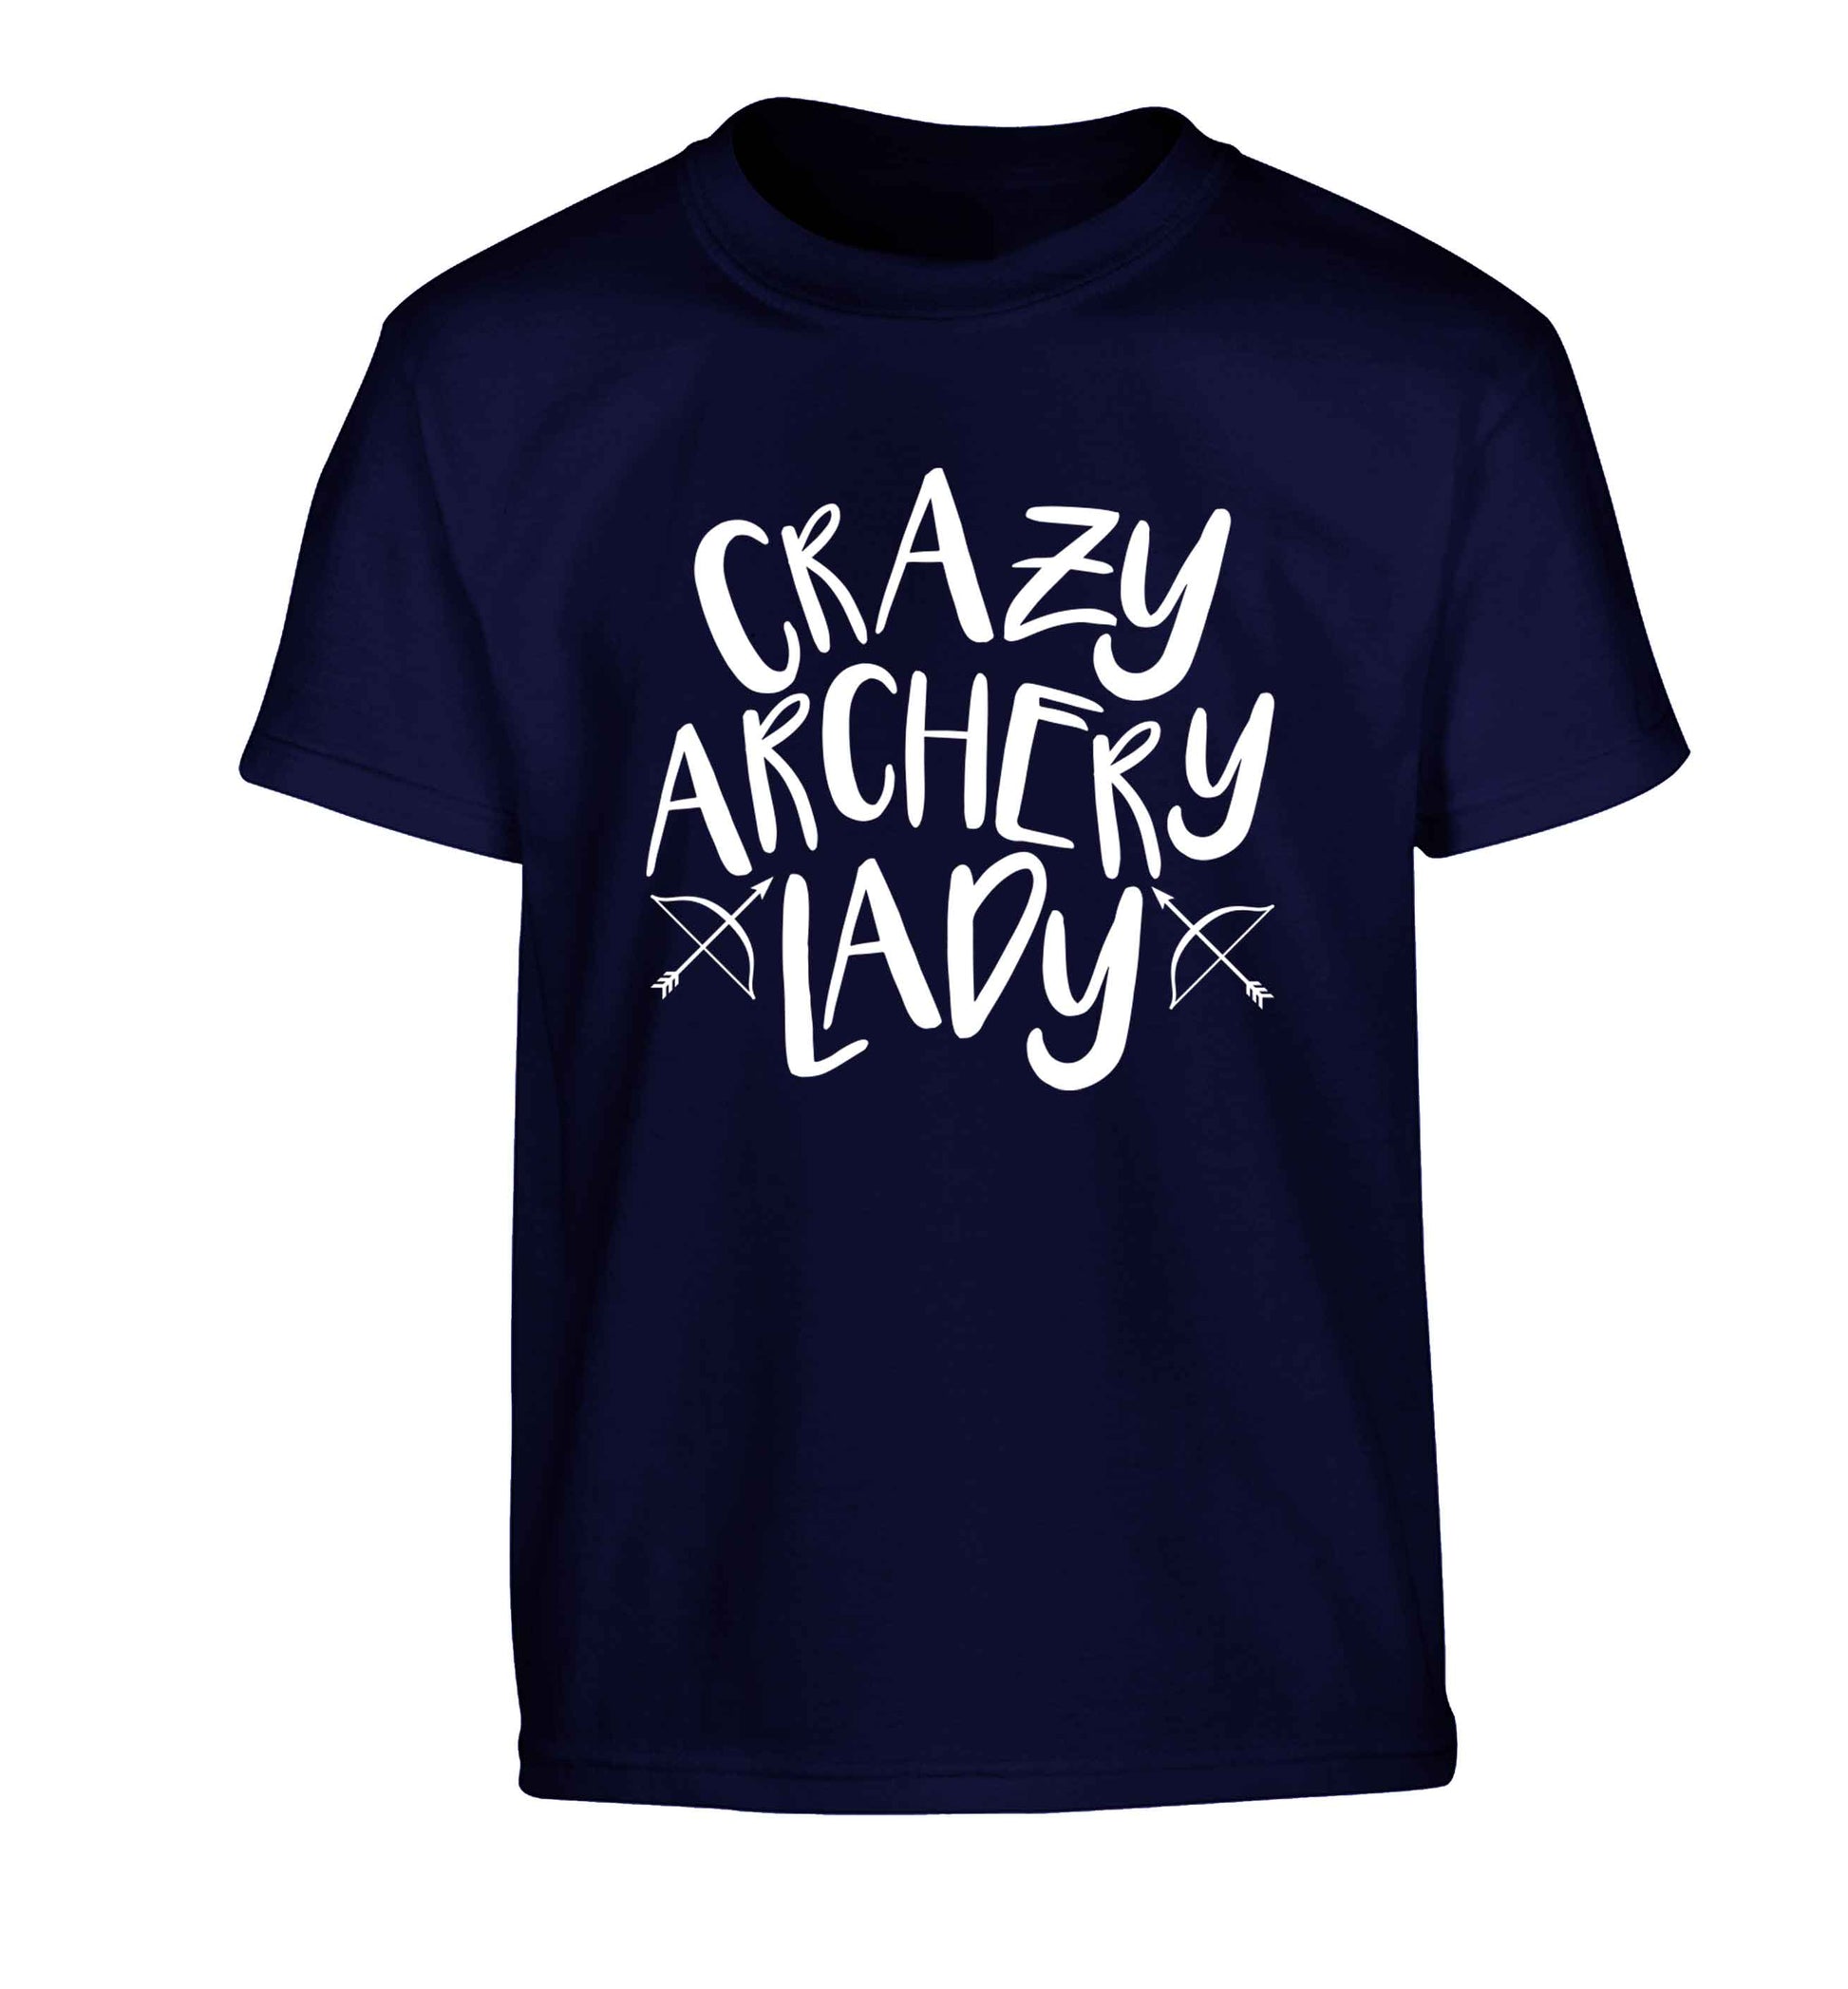 Crazy archery lady Children's navy Tshirt 12-13 Years